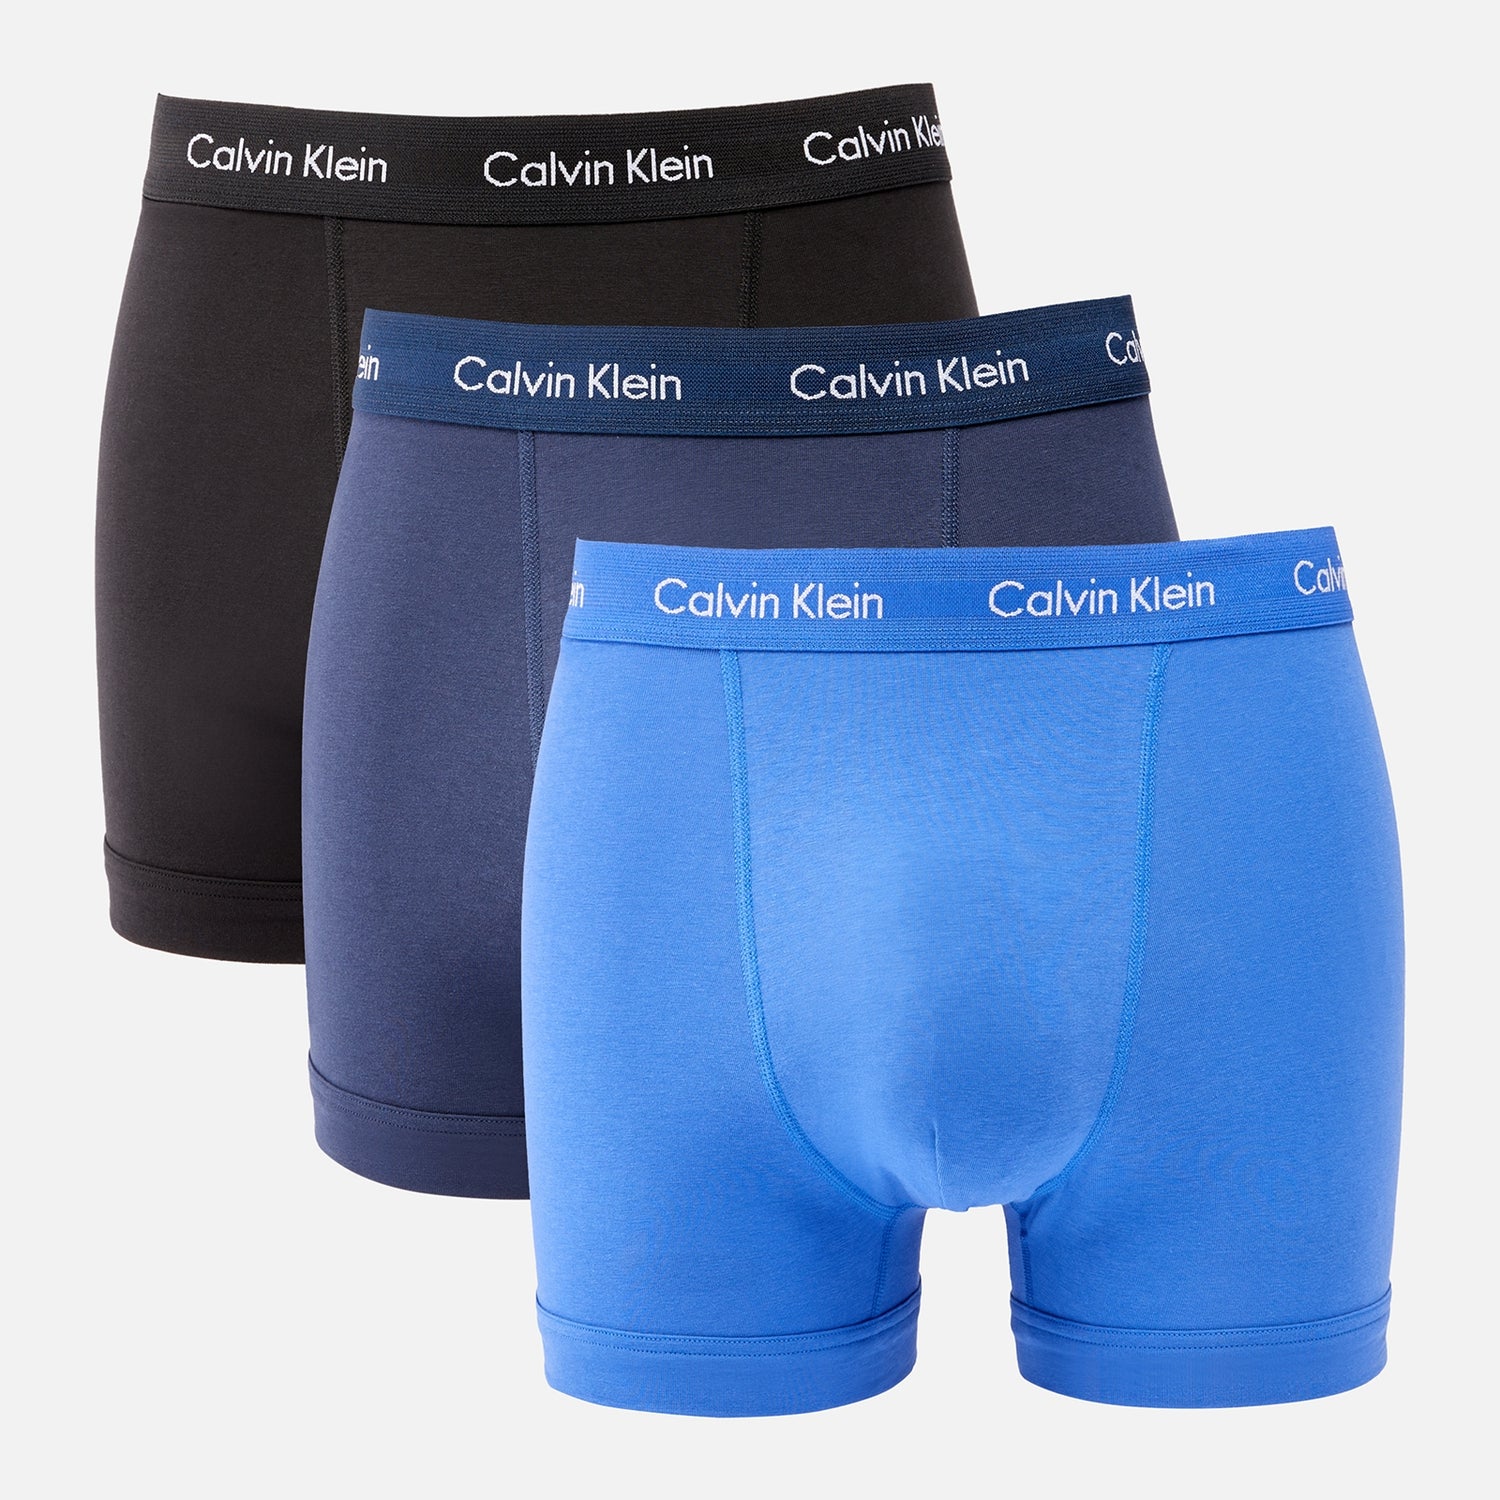 Calvin Klein Men's Cotton Stretch 3-Pack Trunks - Black/Blue/Blue - M